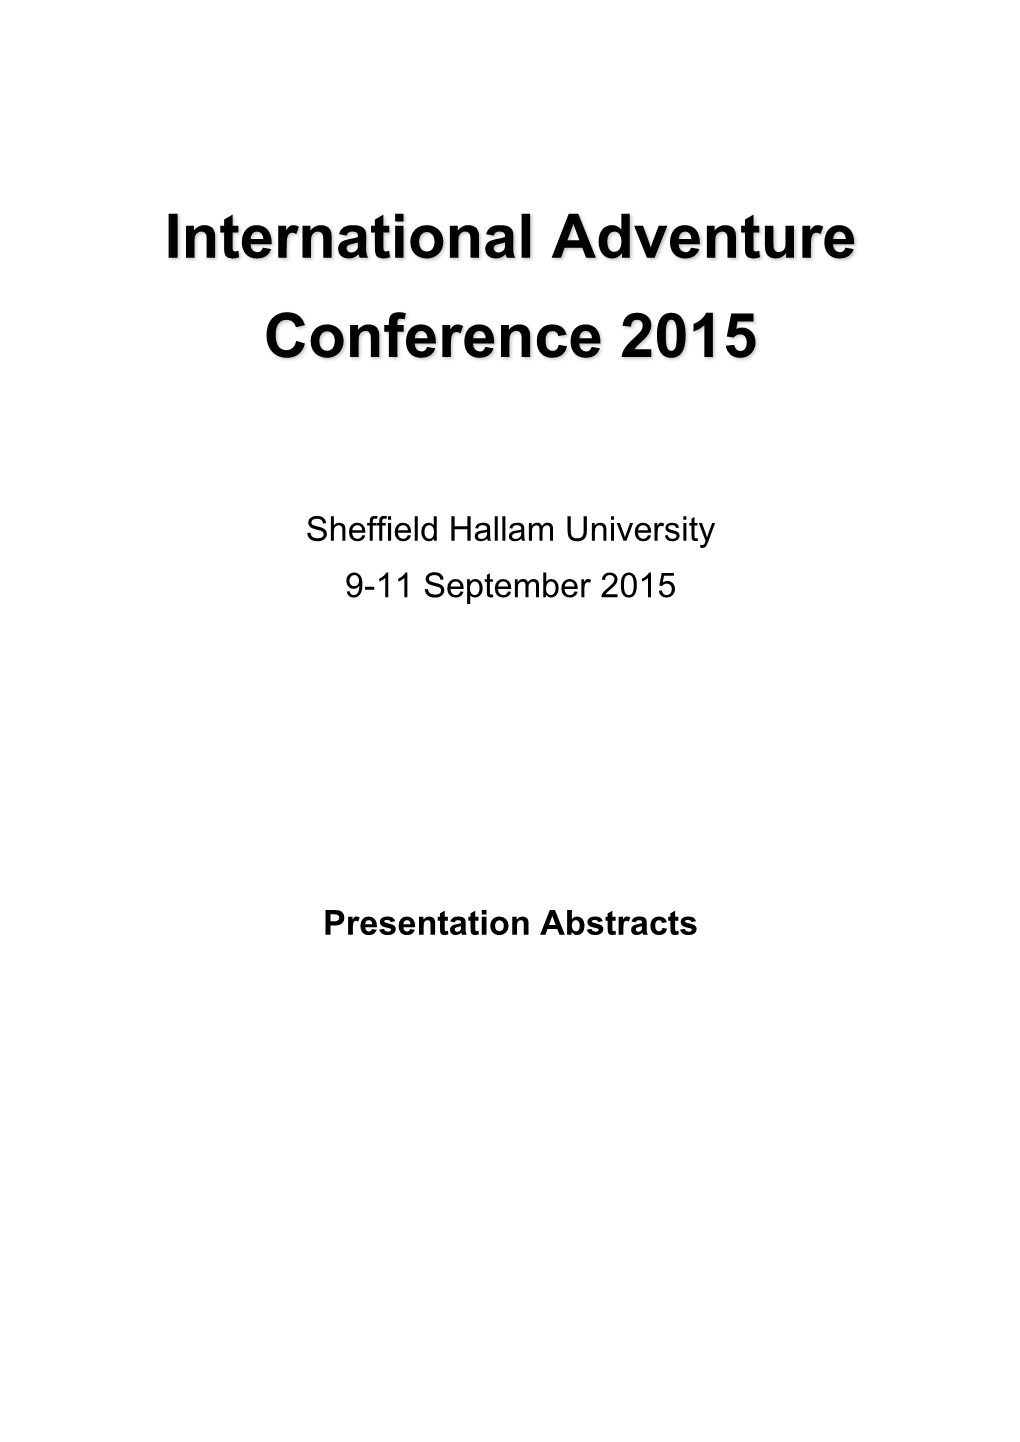 International Adventure Conference 2015 Sheffield, England, UK